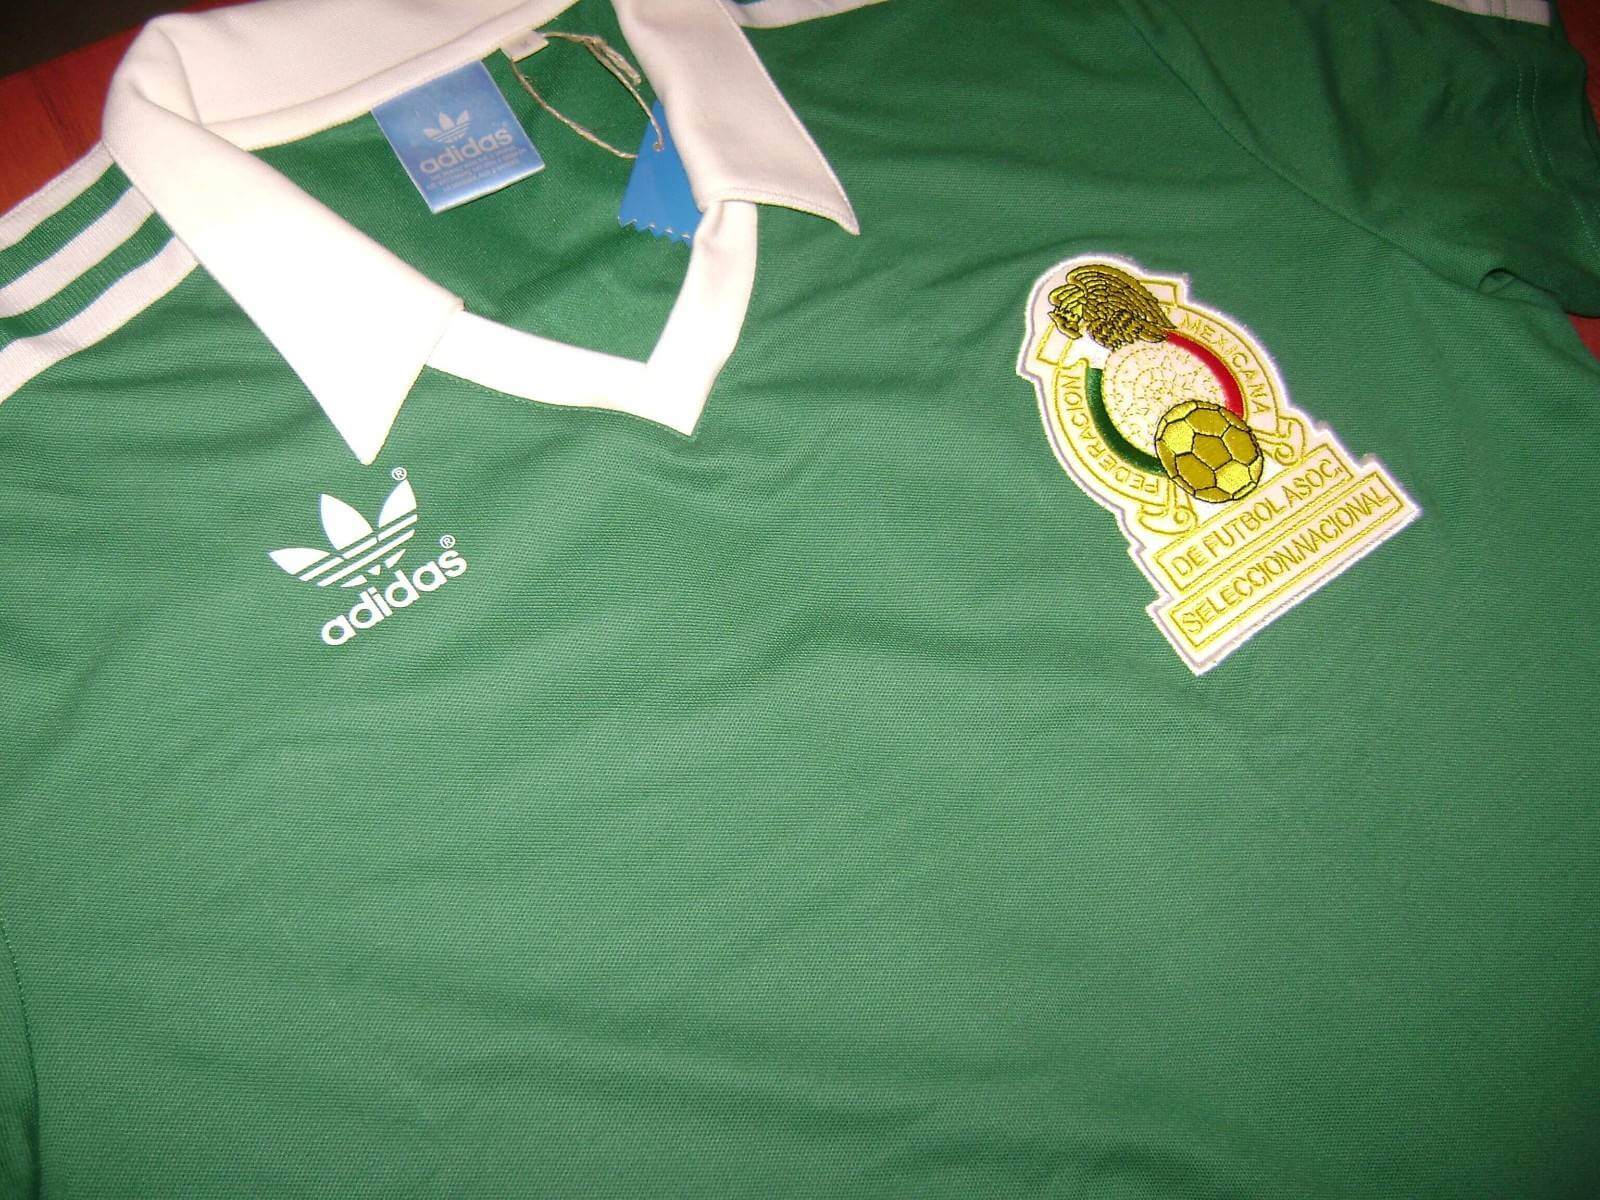 Mexico 1986 kit